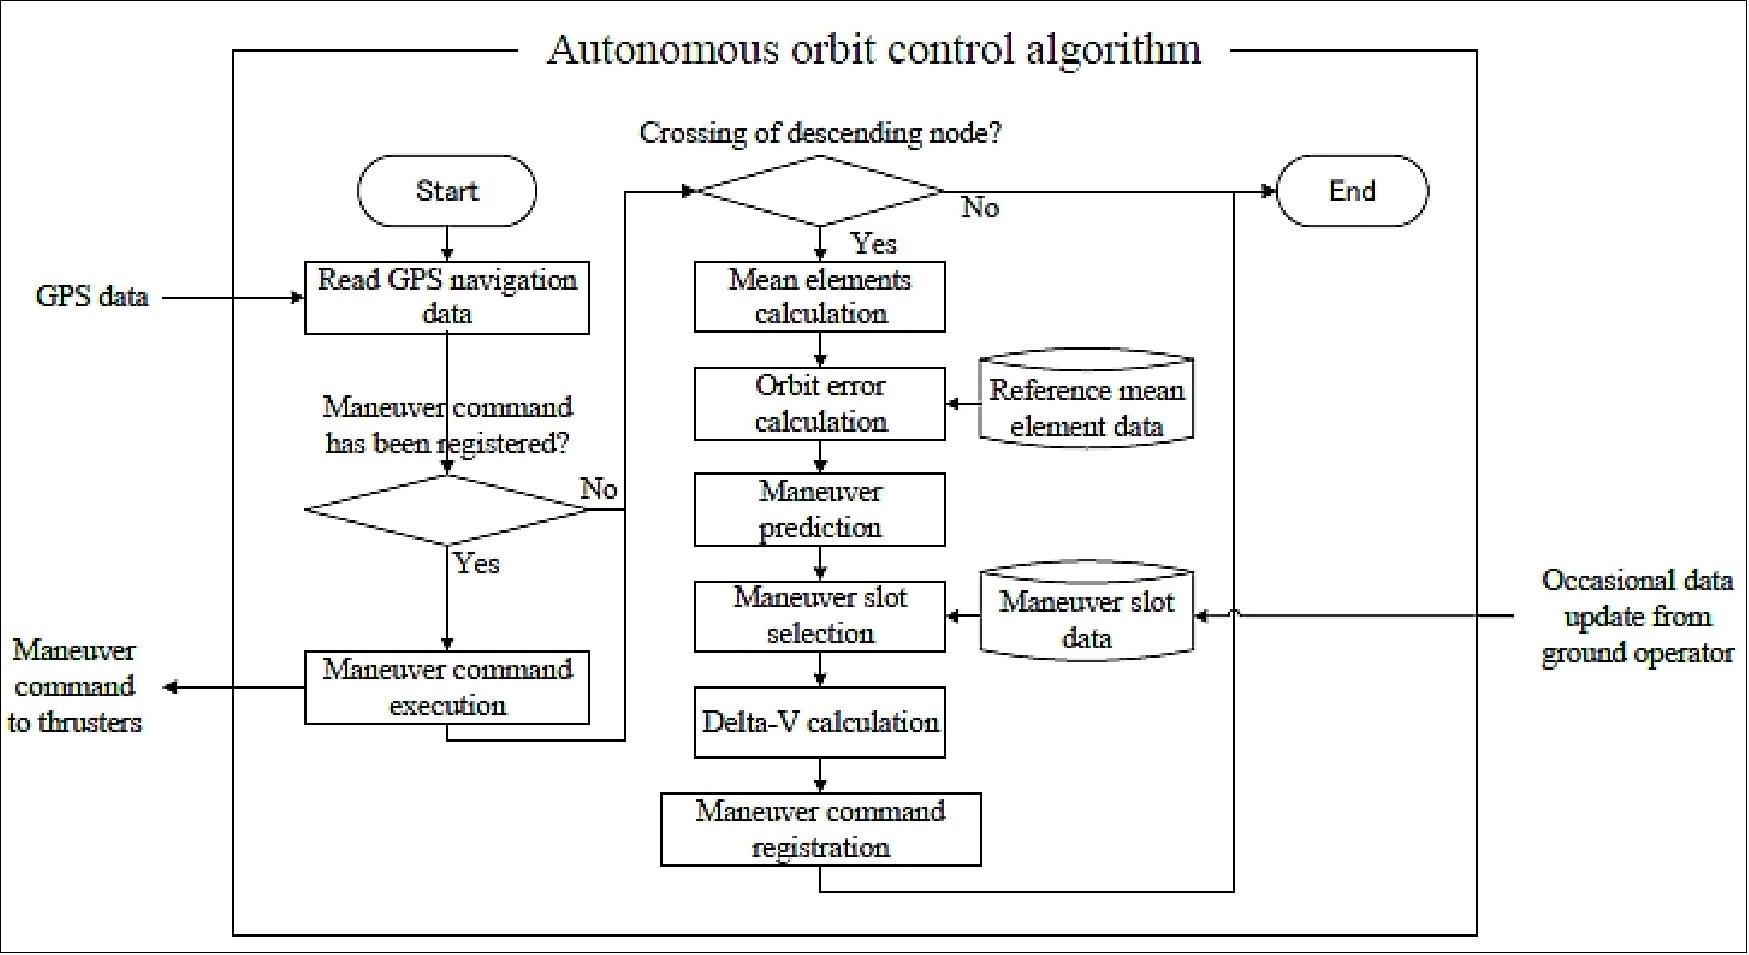 Figure 12: Flow chart of autonomous orbit control algorithm (image credit: JAXA)